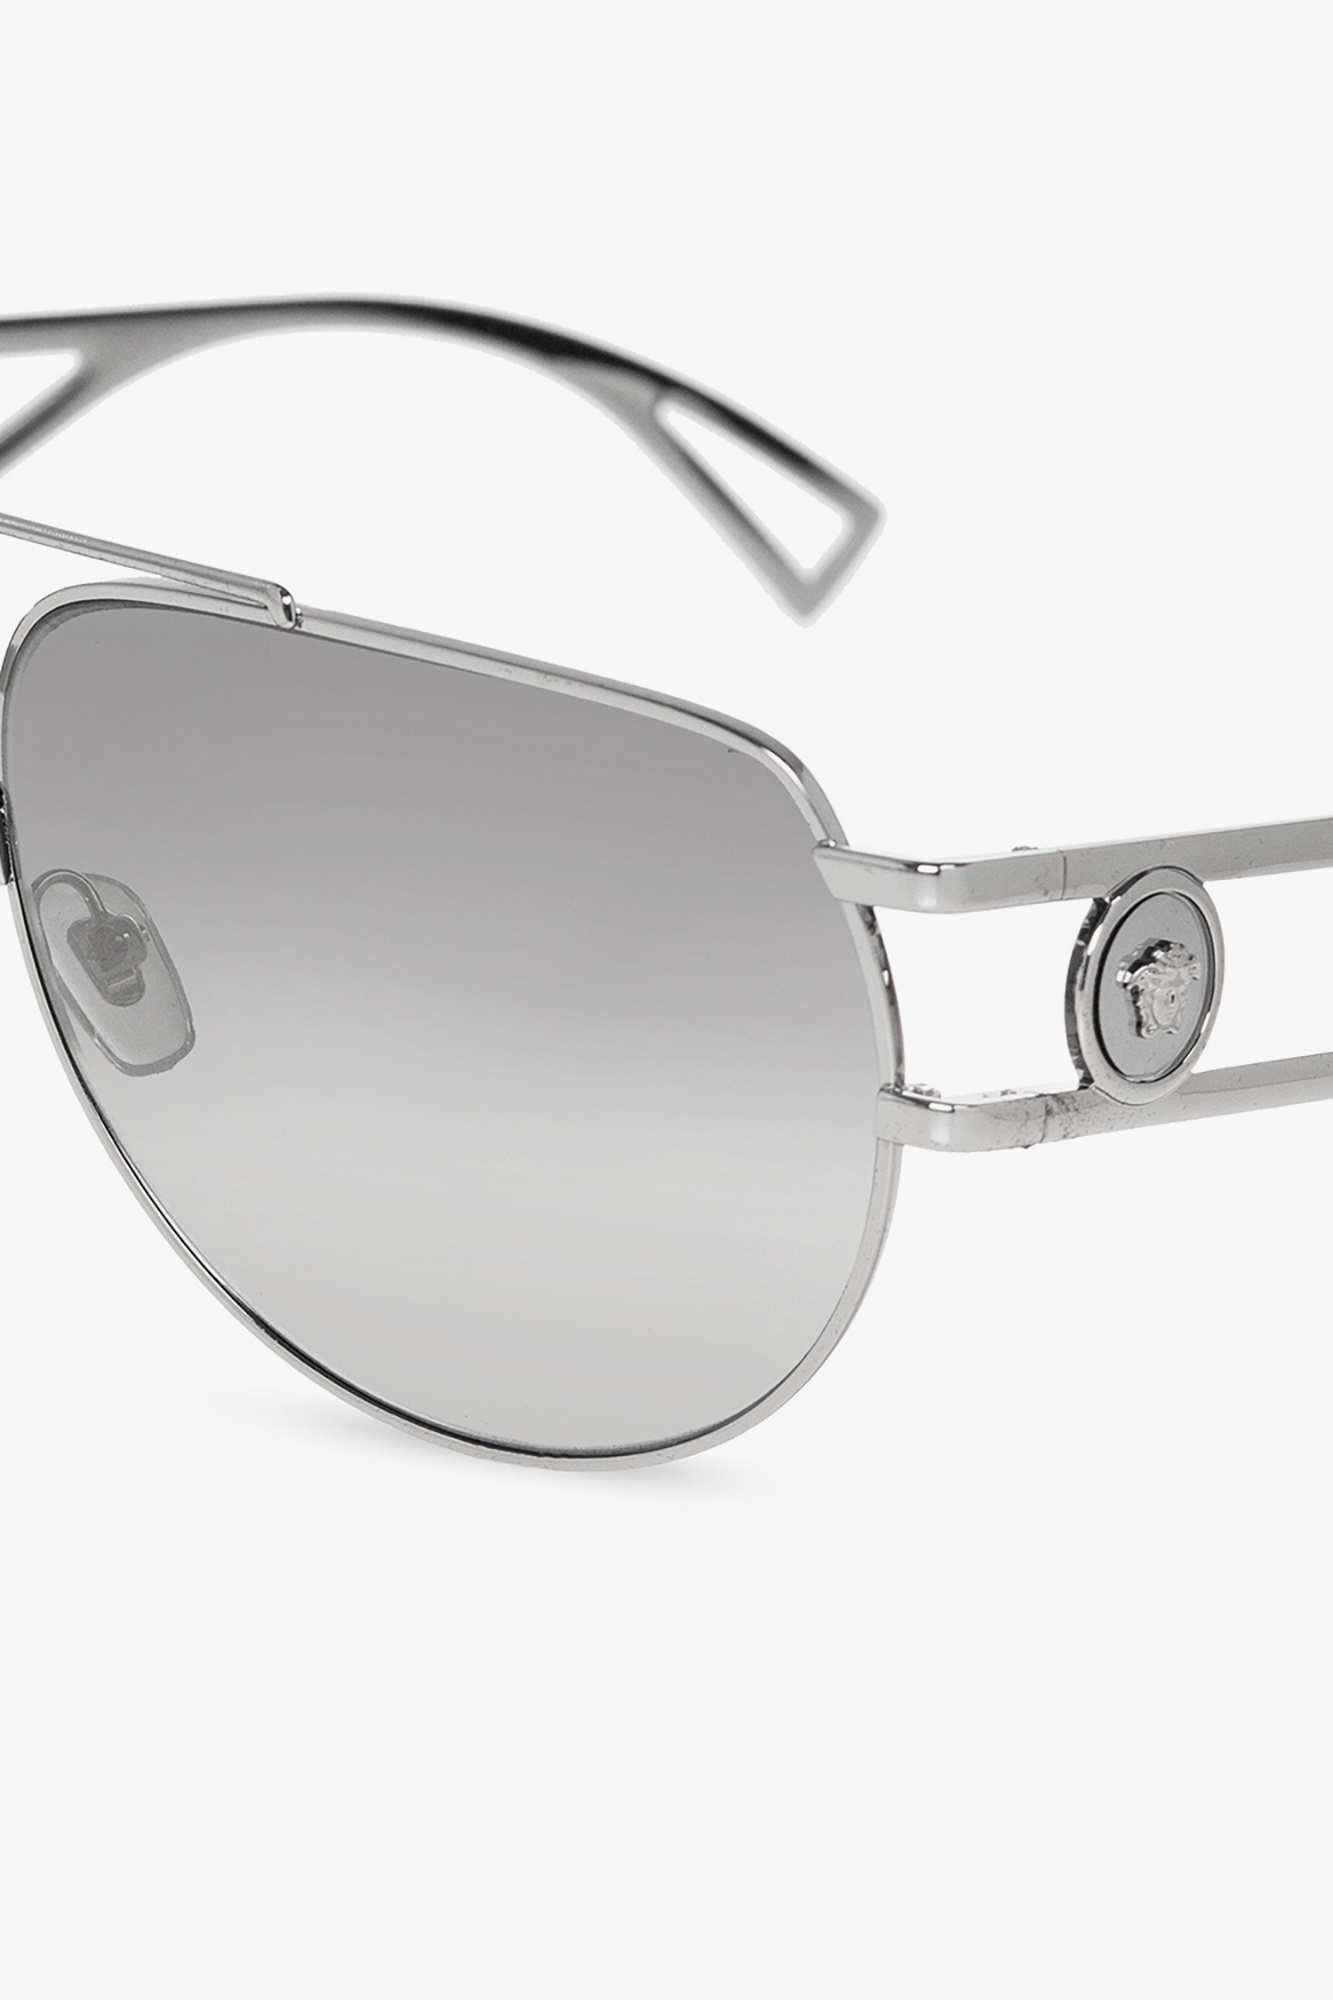 Versace sunglasses REEF from luxury Italian fashion house